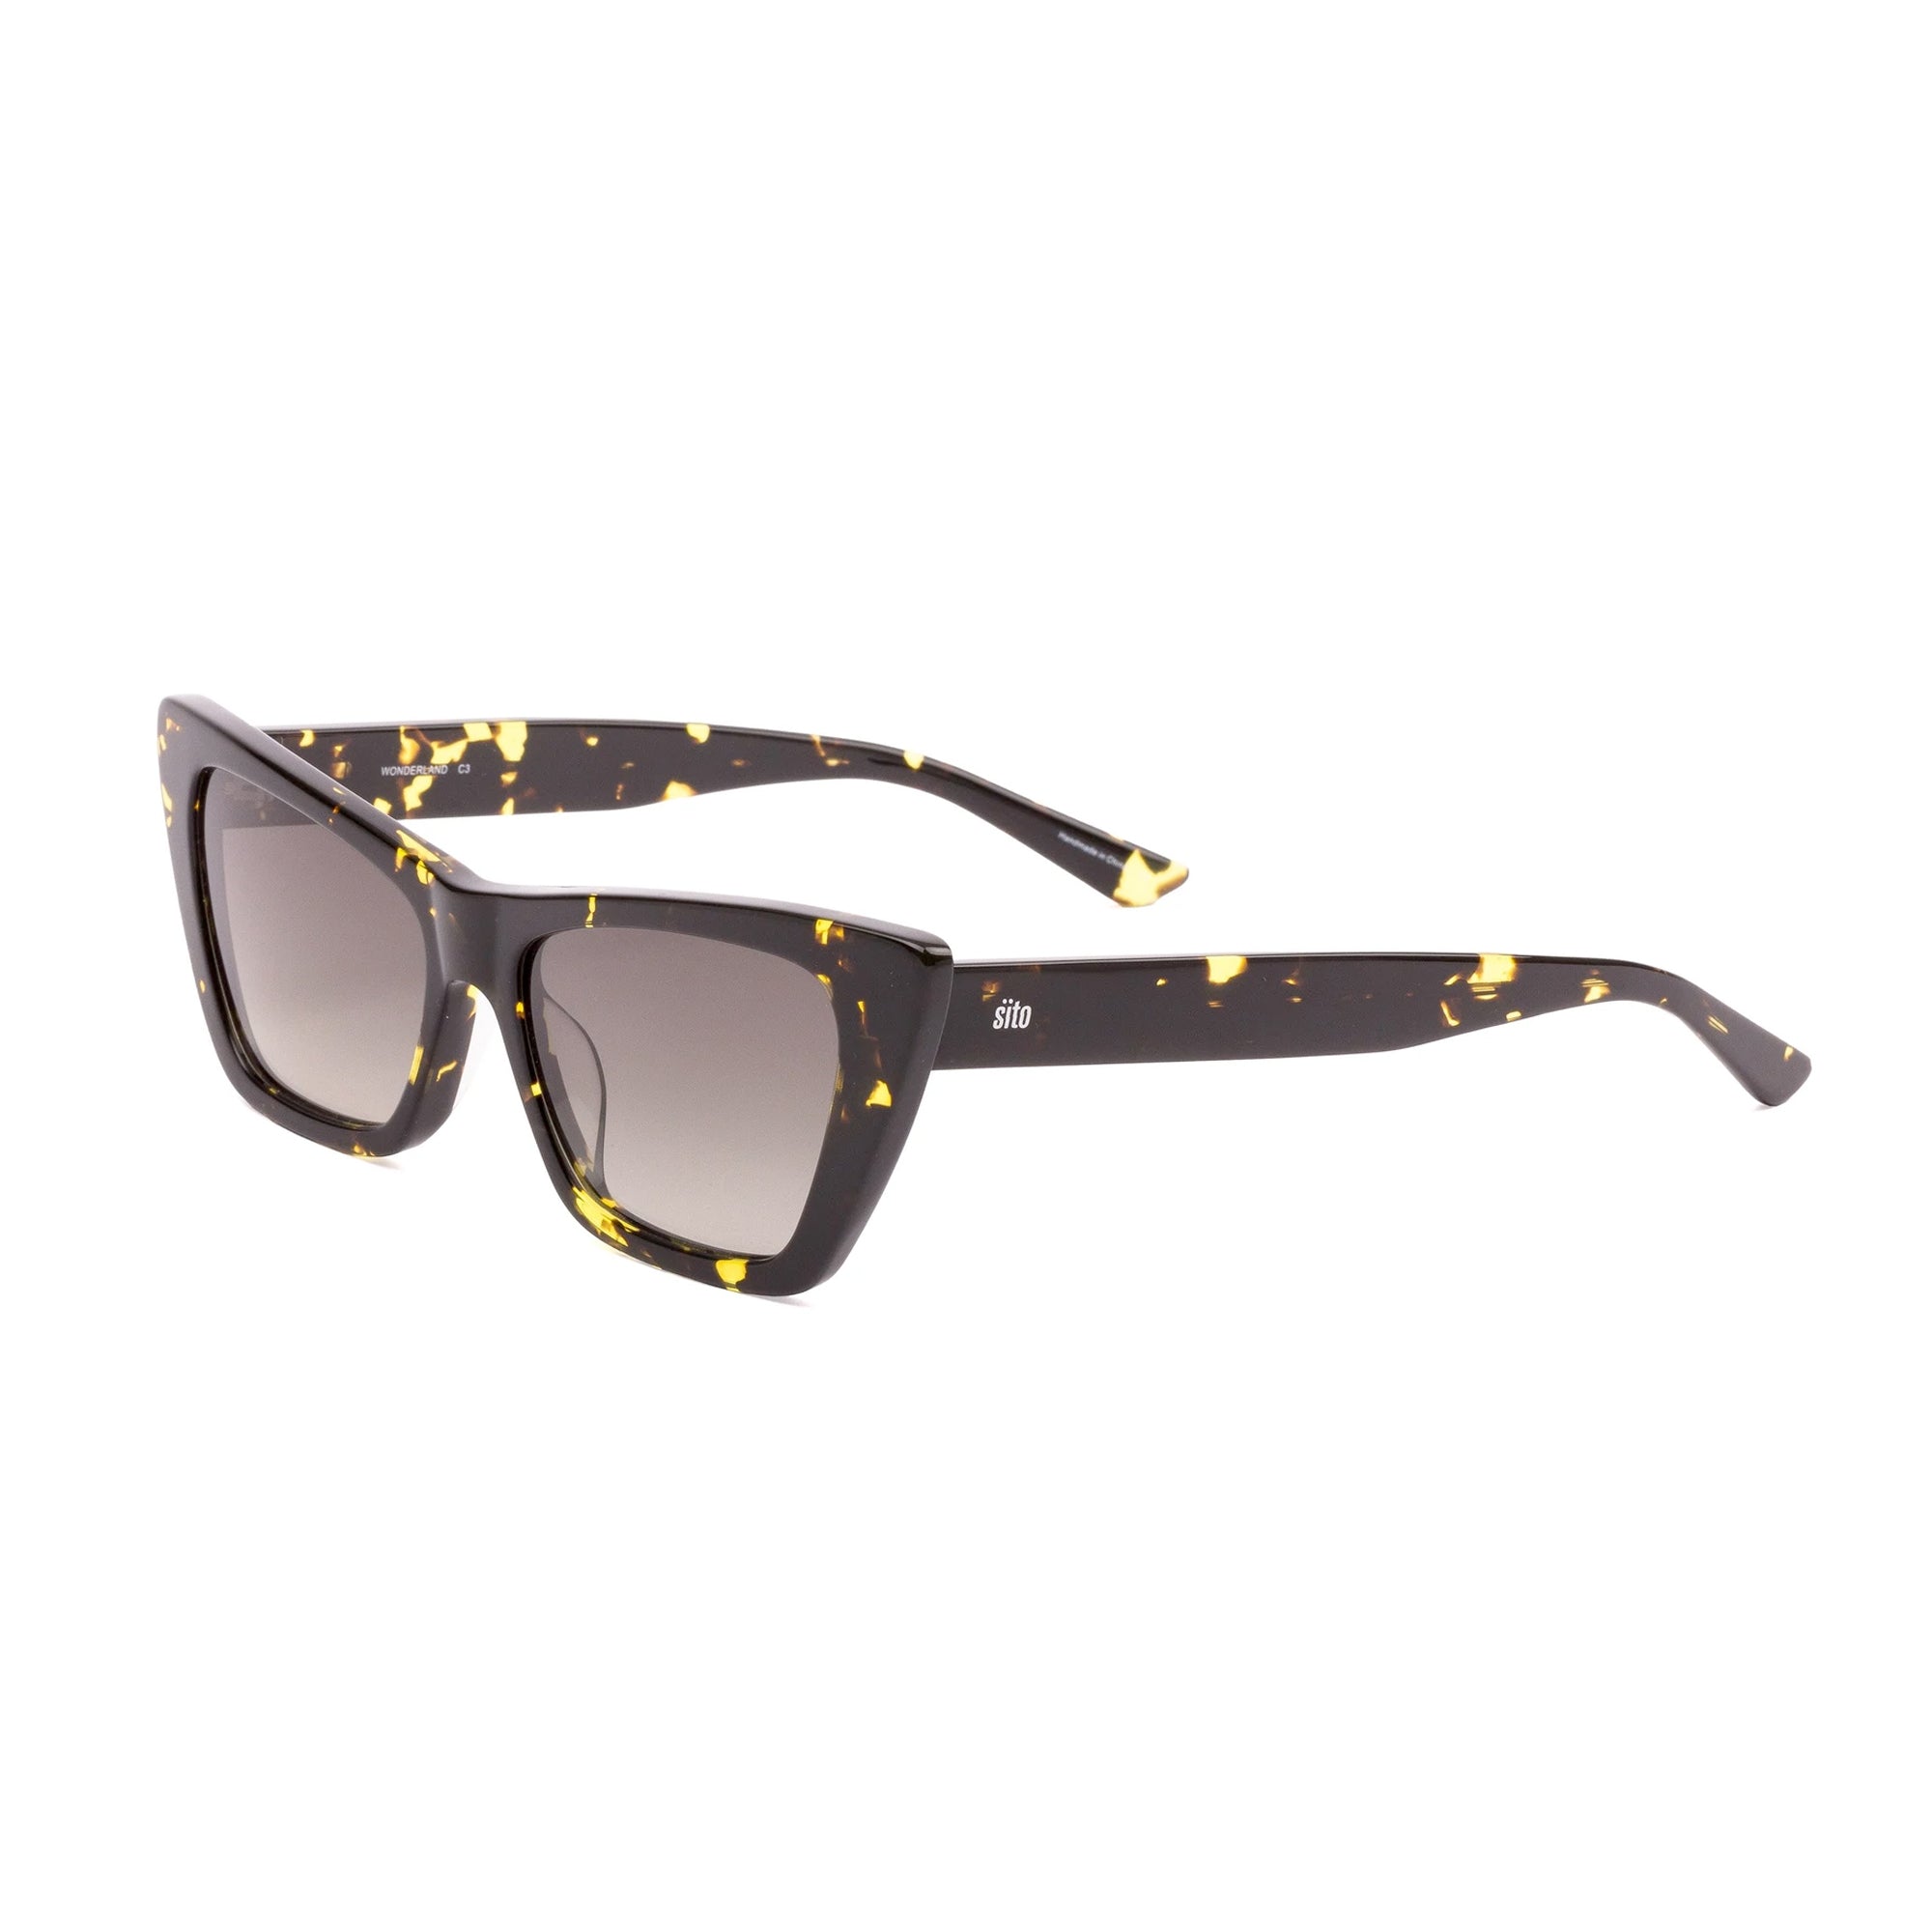 Sito Wonderland Women's Polarized Sunglasses